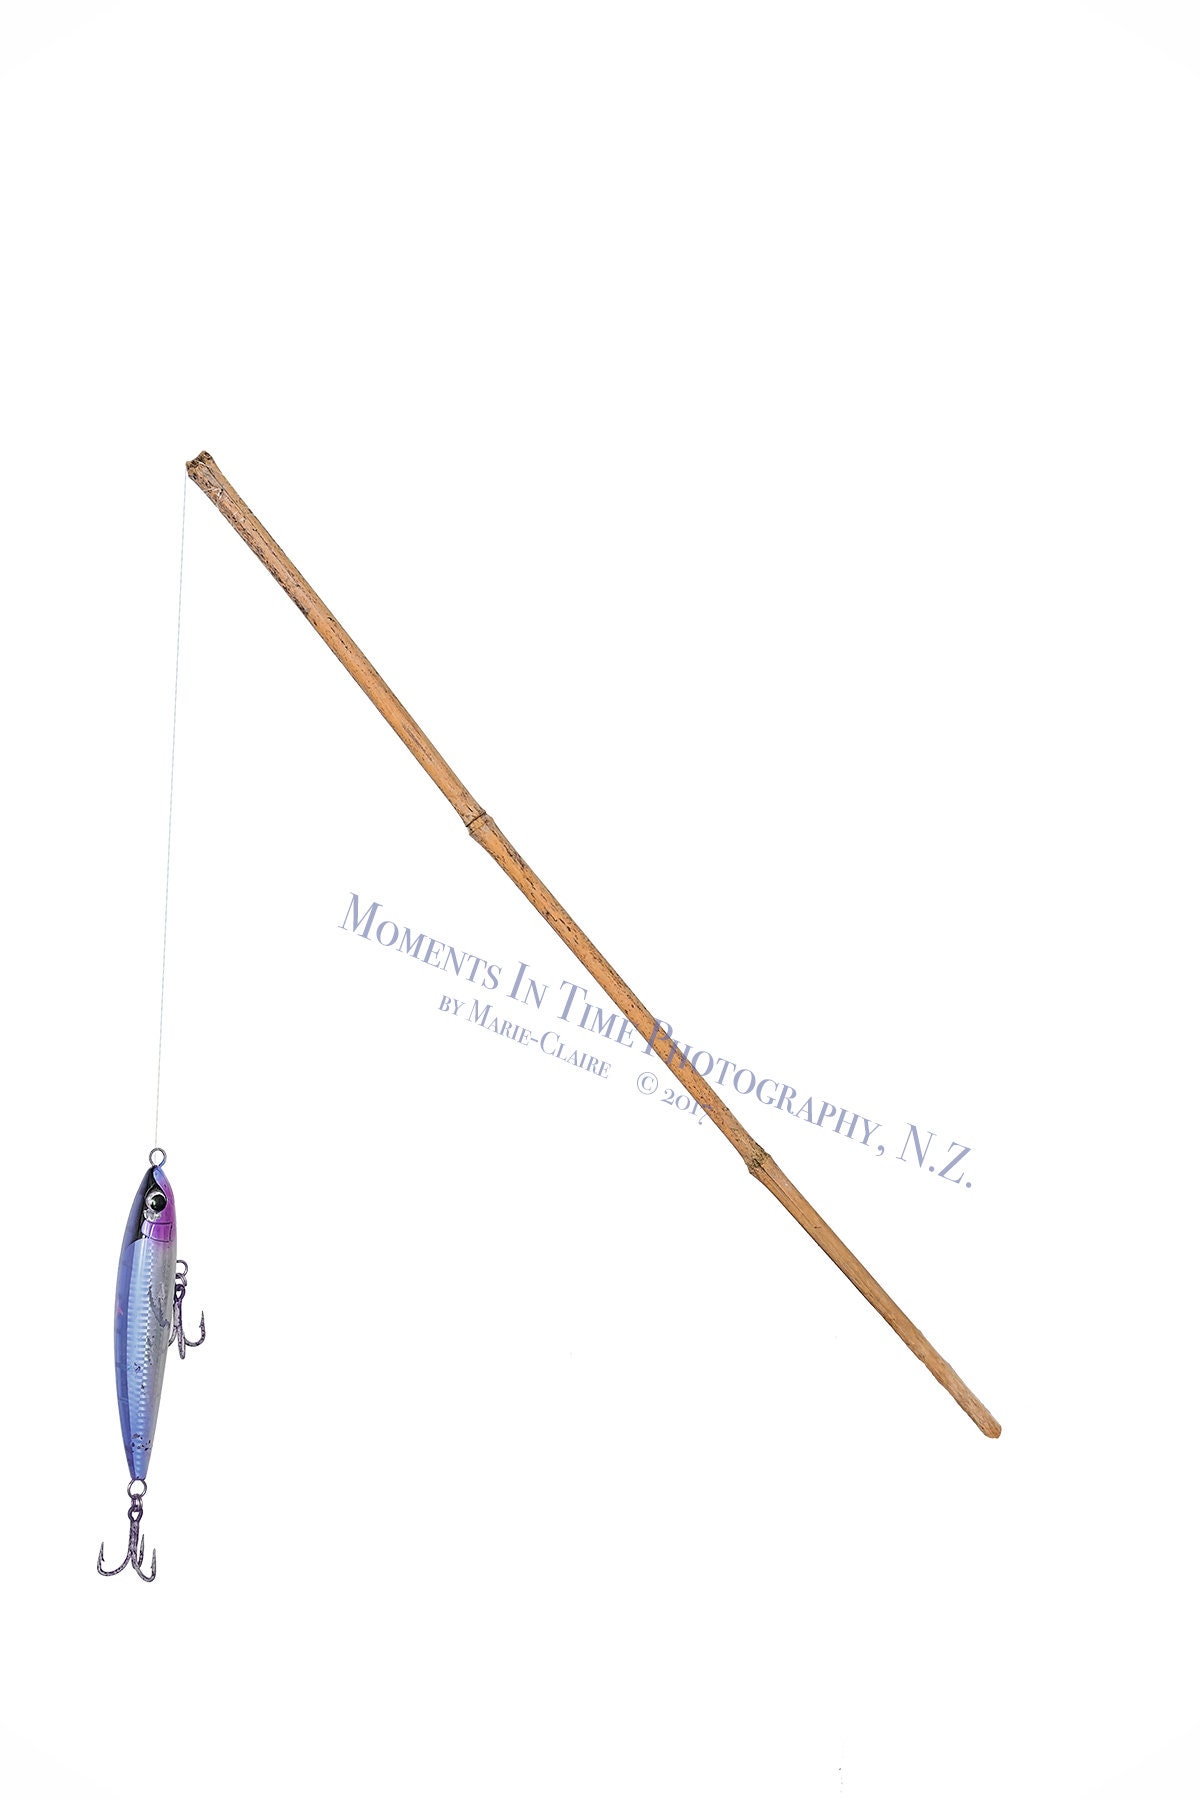 Vintage Bamboo Fishing Rod 